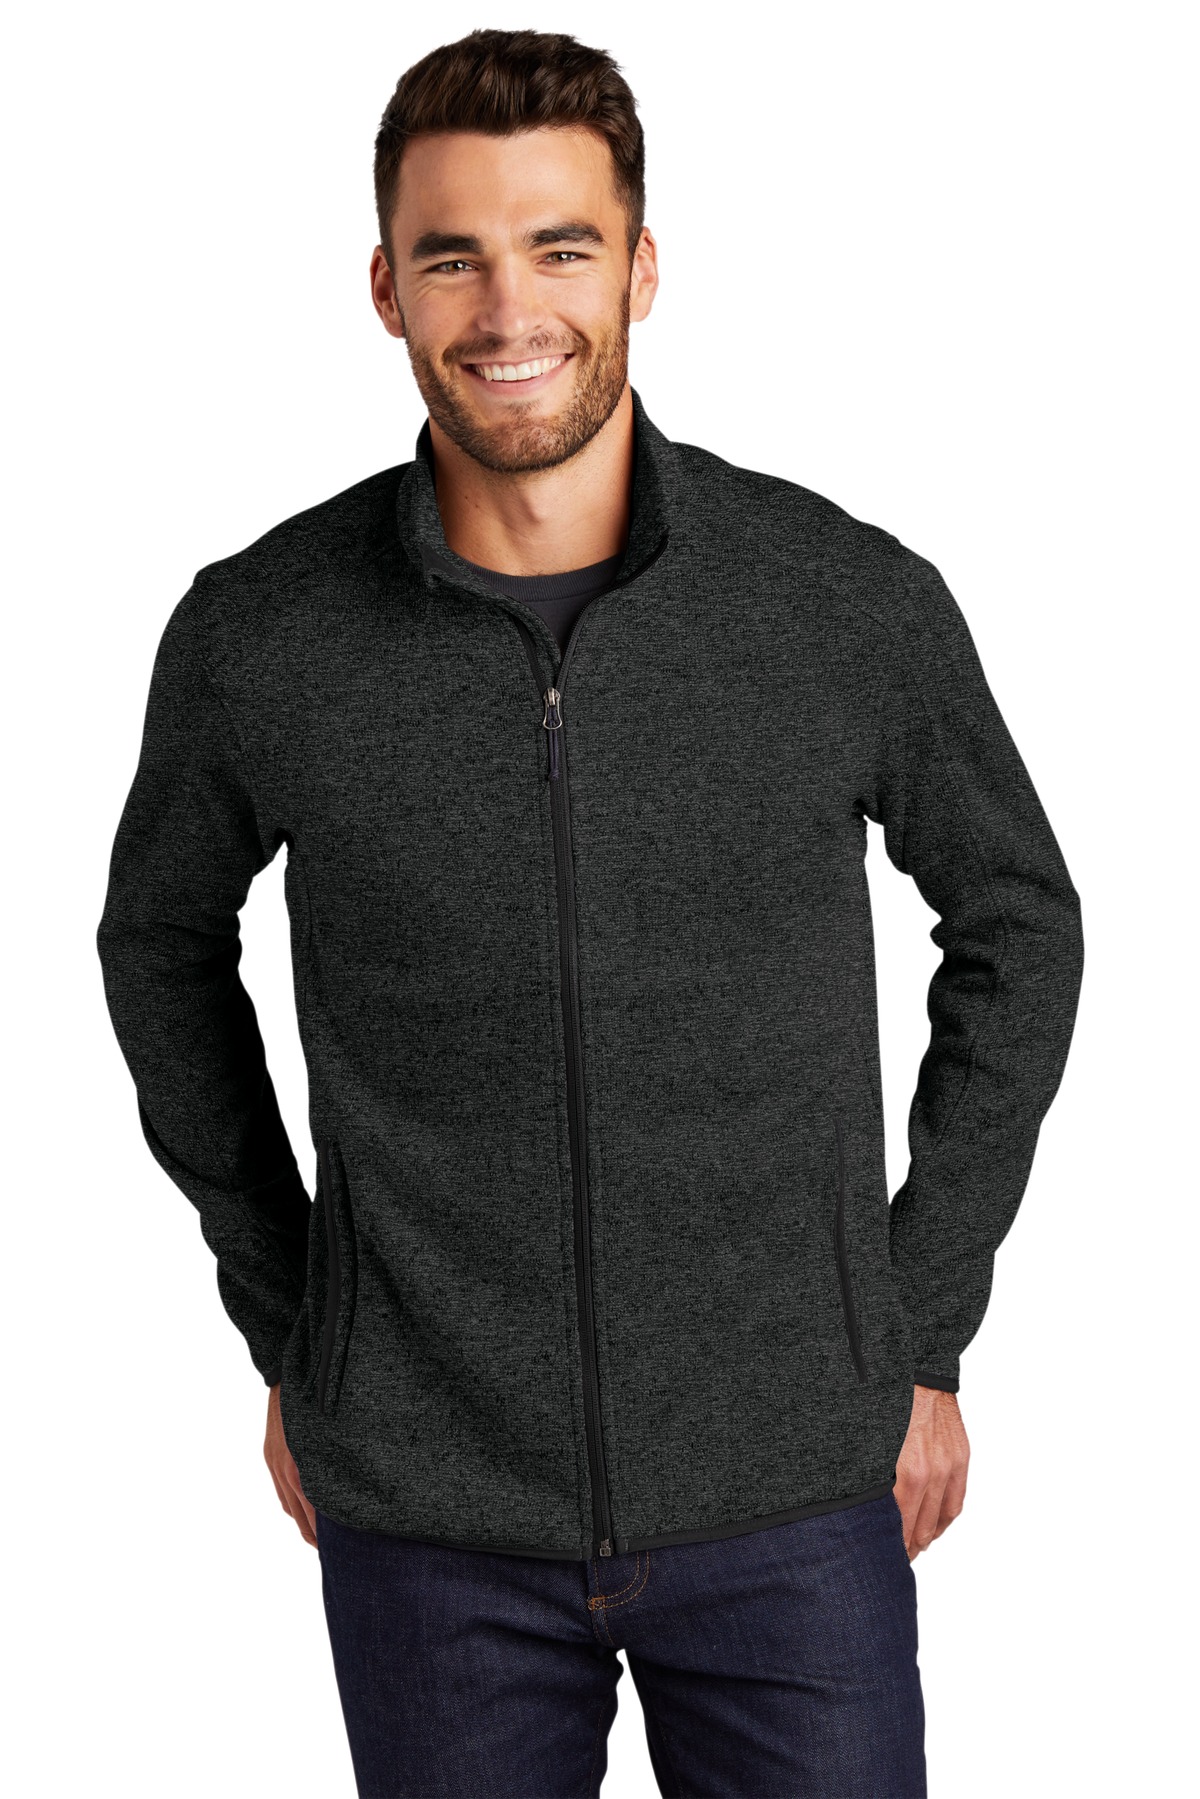 Port Authority Sweater Fleece Jacket-Port Authority